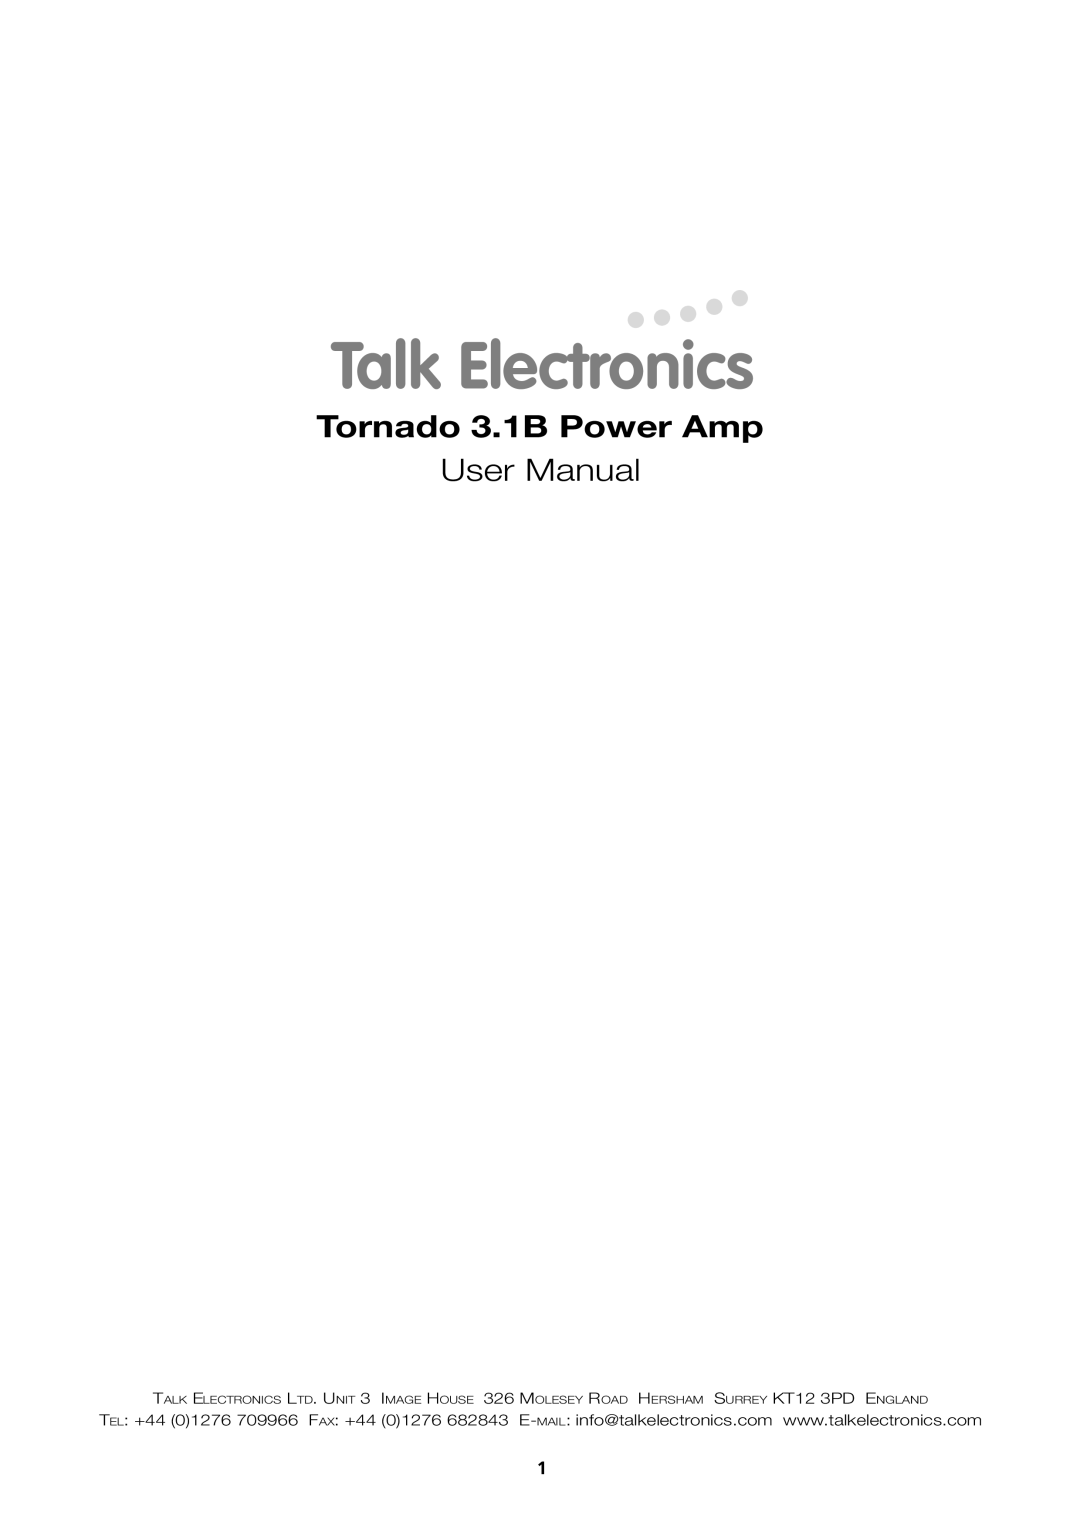 Talk electronic Tornado 3.1B Power Amplifier user manual Talk Electronics 